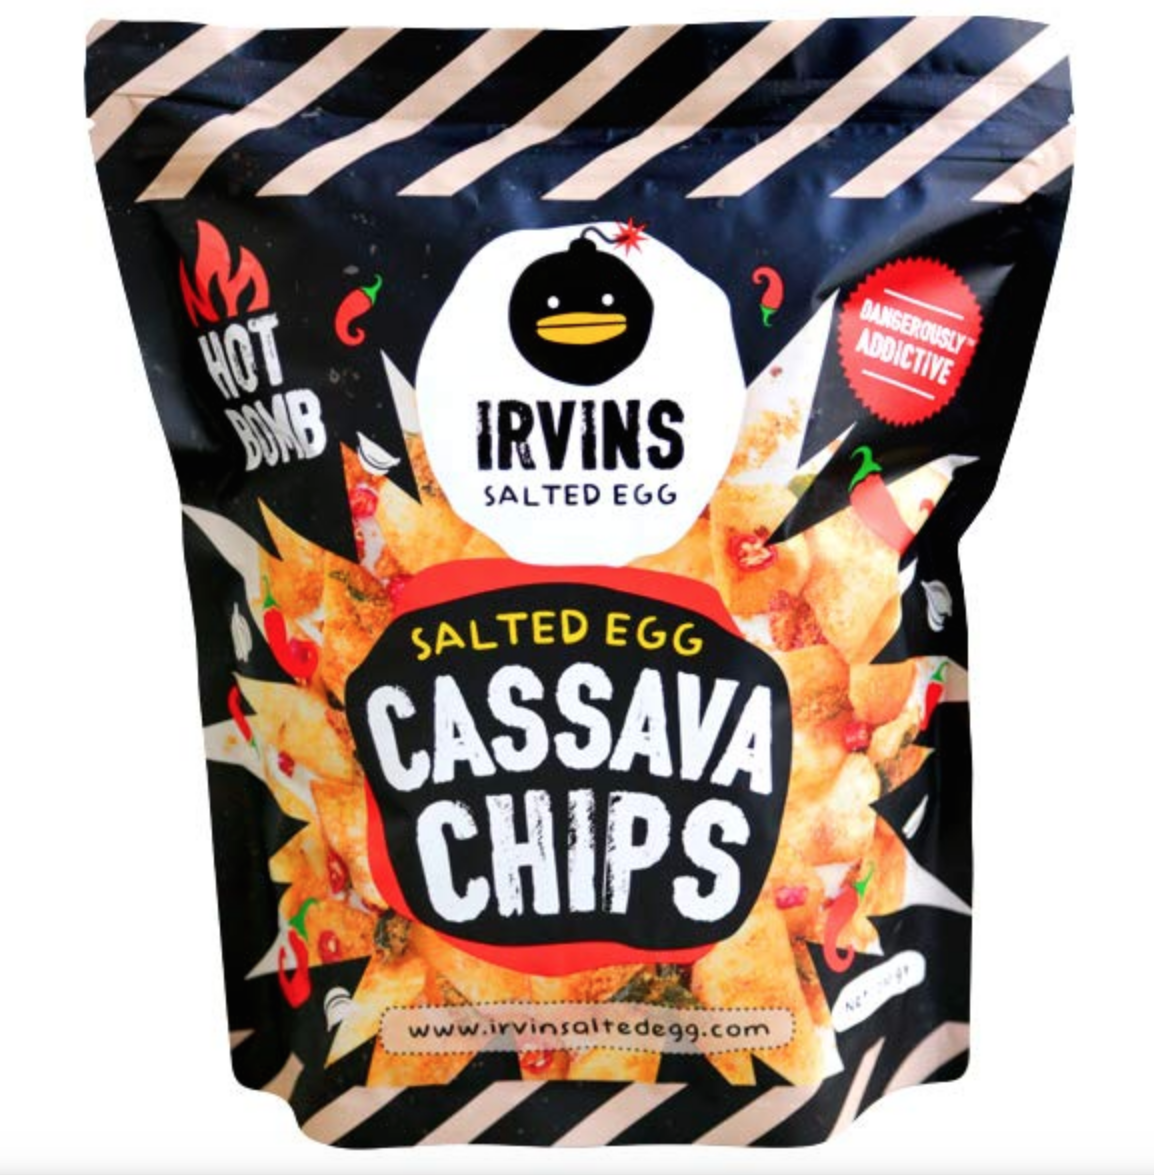 Irvins Salted Egg - Cassava Chips (Hot Boom)